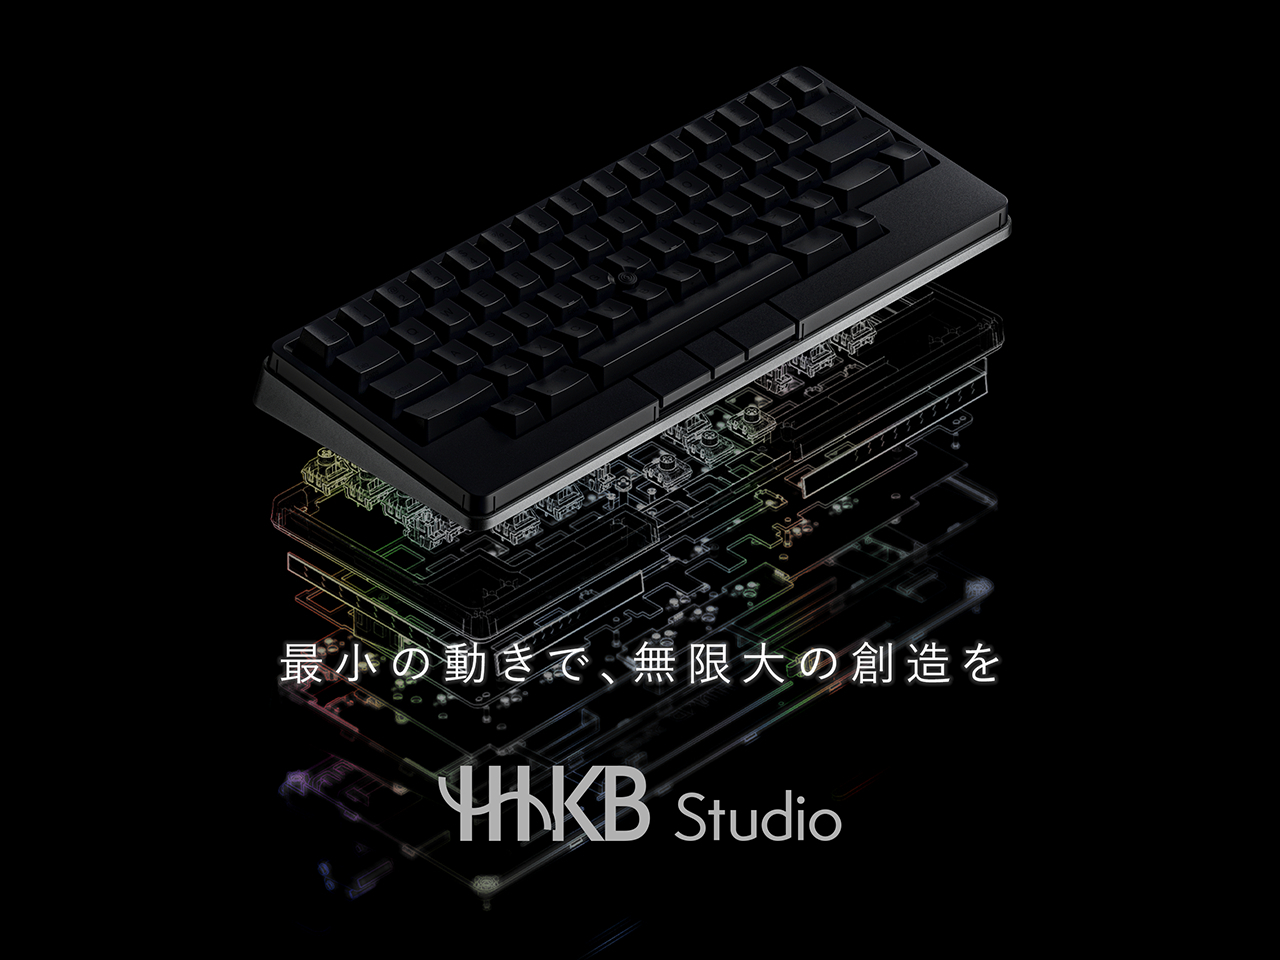 PFU、米国拠点発のキーボード「HHKB Studio」--マウス機能や